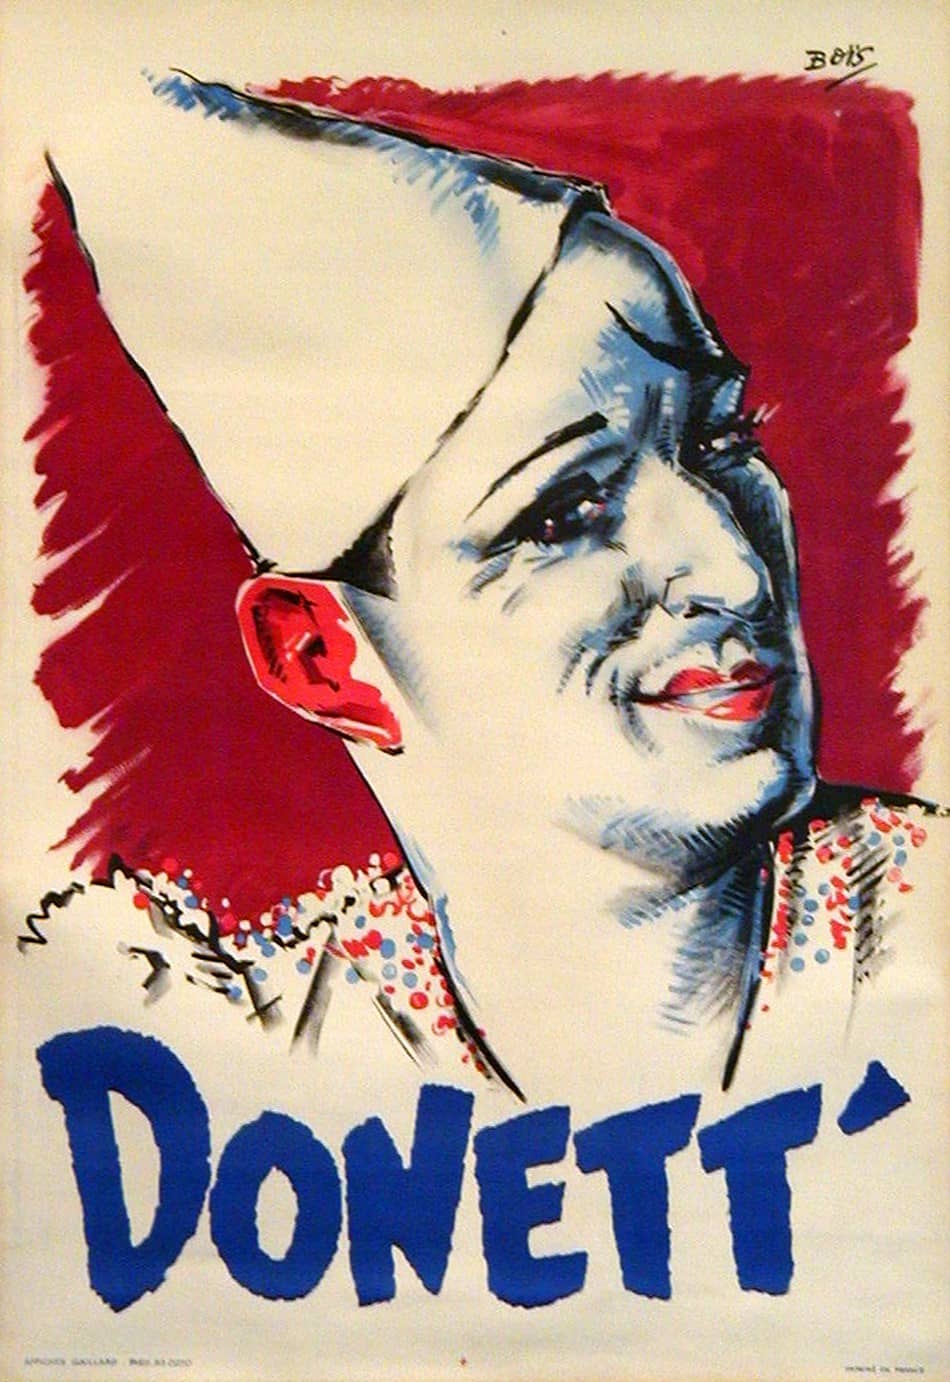 Original Vintage Donnett Clown Poster by Bois 1930 Circus